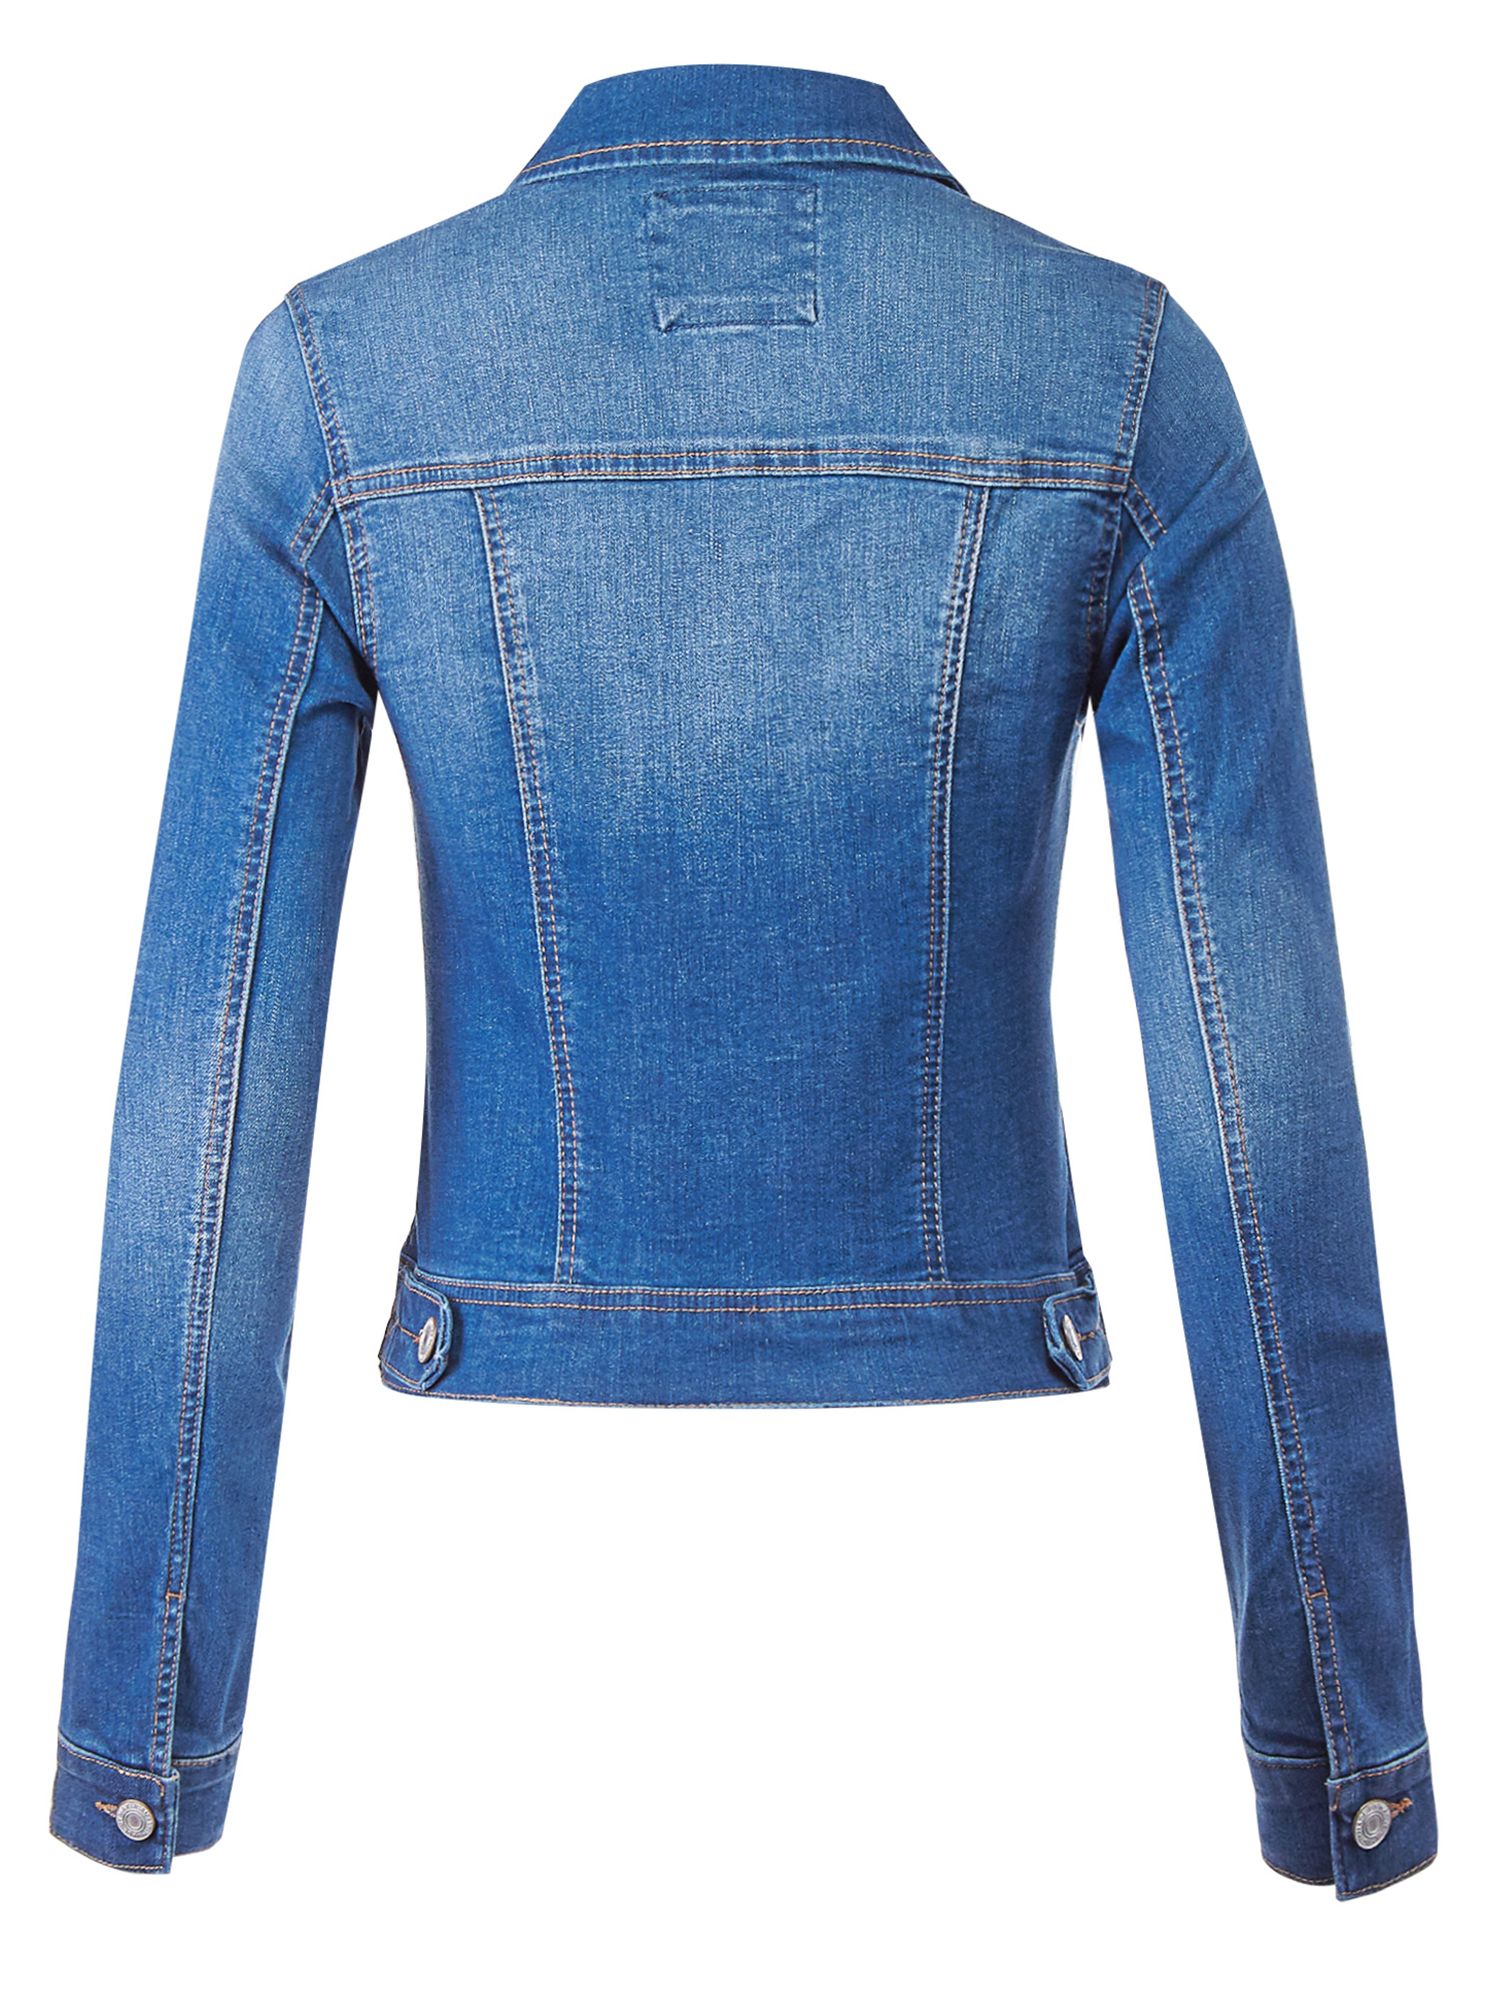 FashionMille Regular Slim Fit Washed Denim Women Jacket Jean Jacket - image 3 of 5